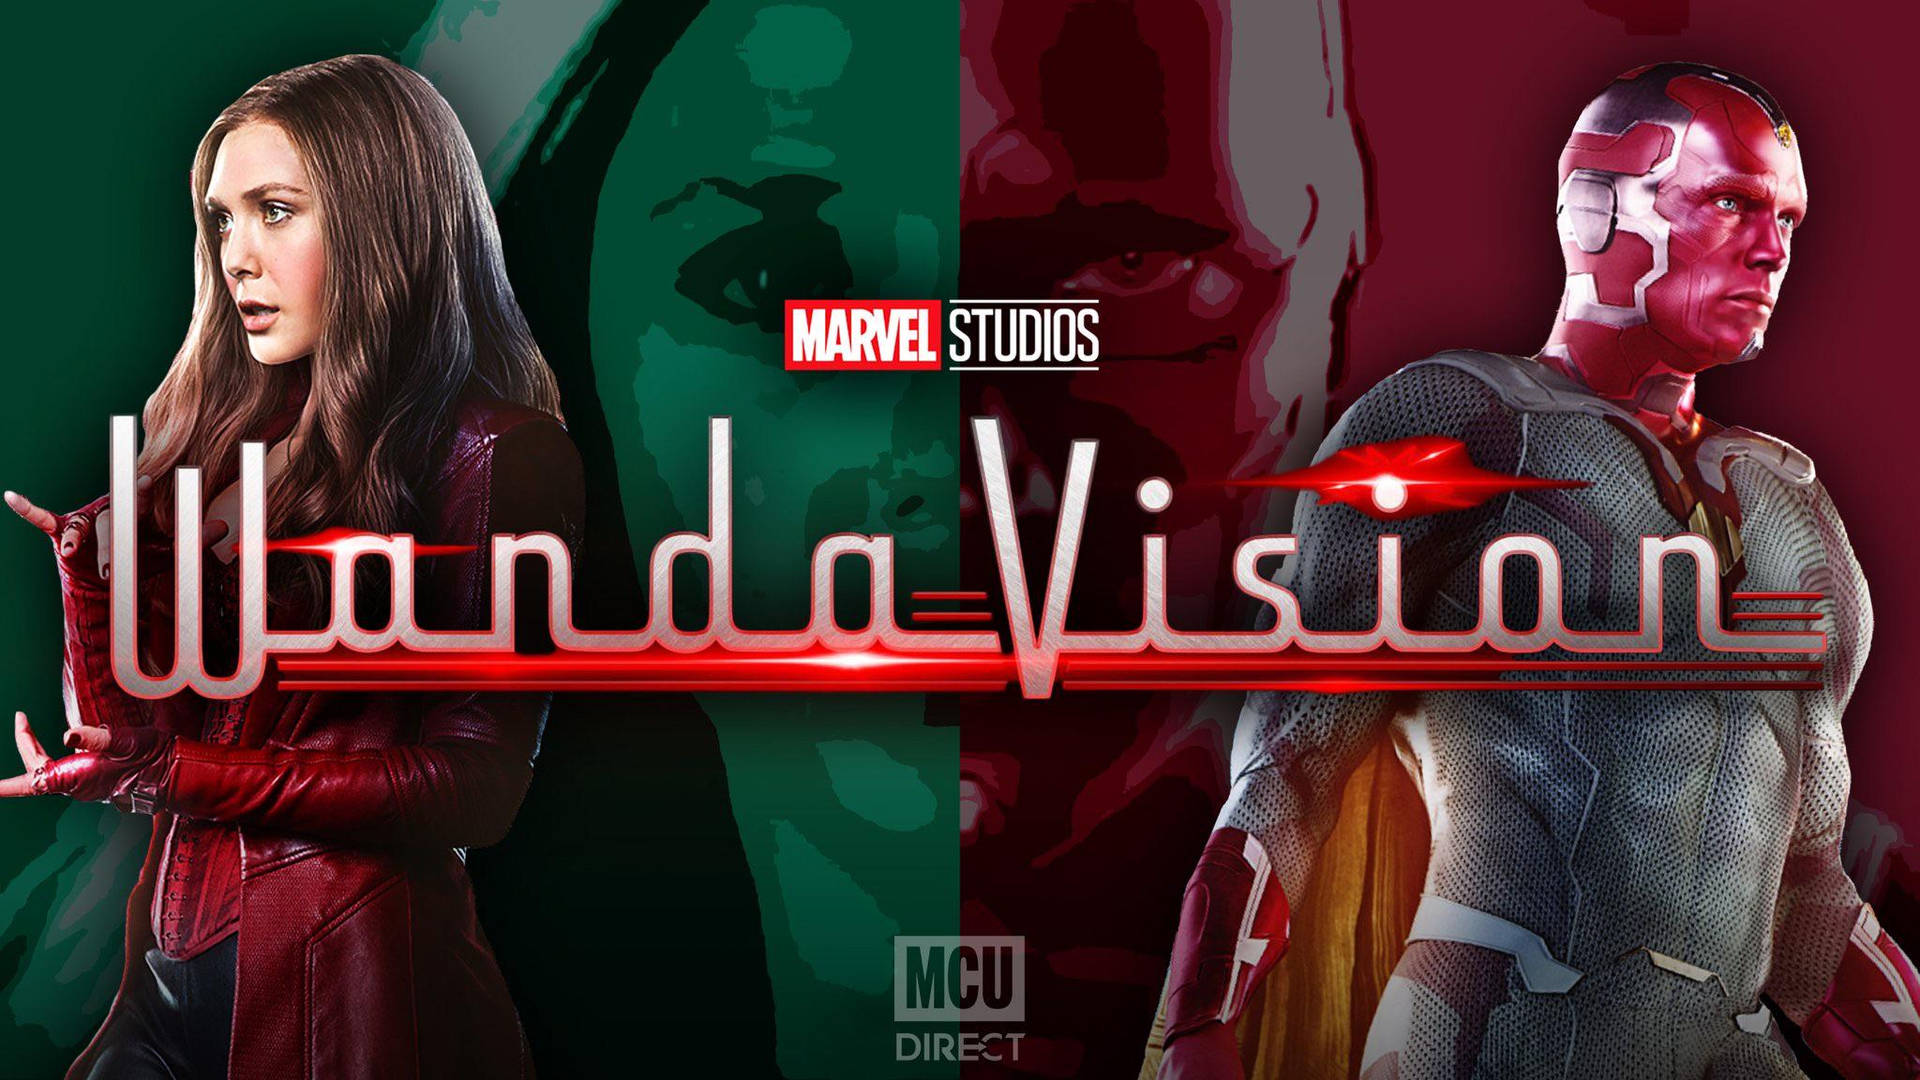 Wandavision Marvel Studios Poster 2020